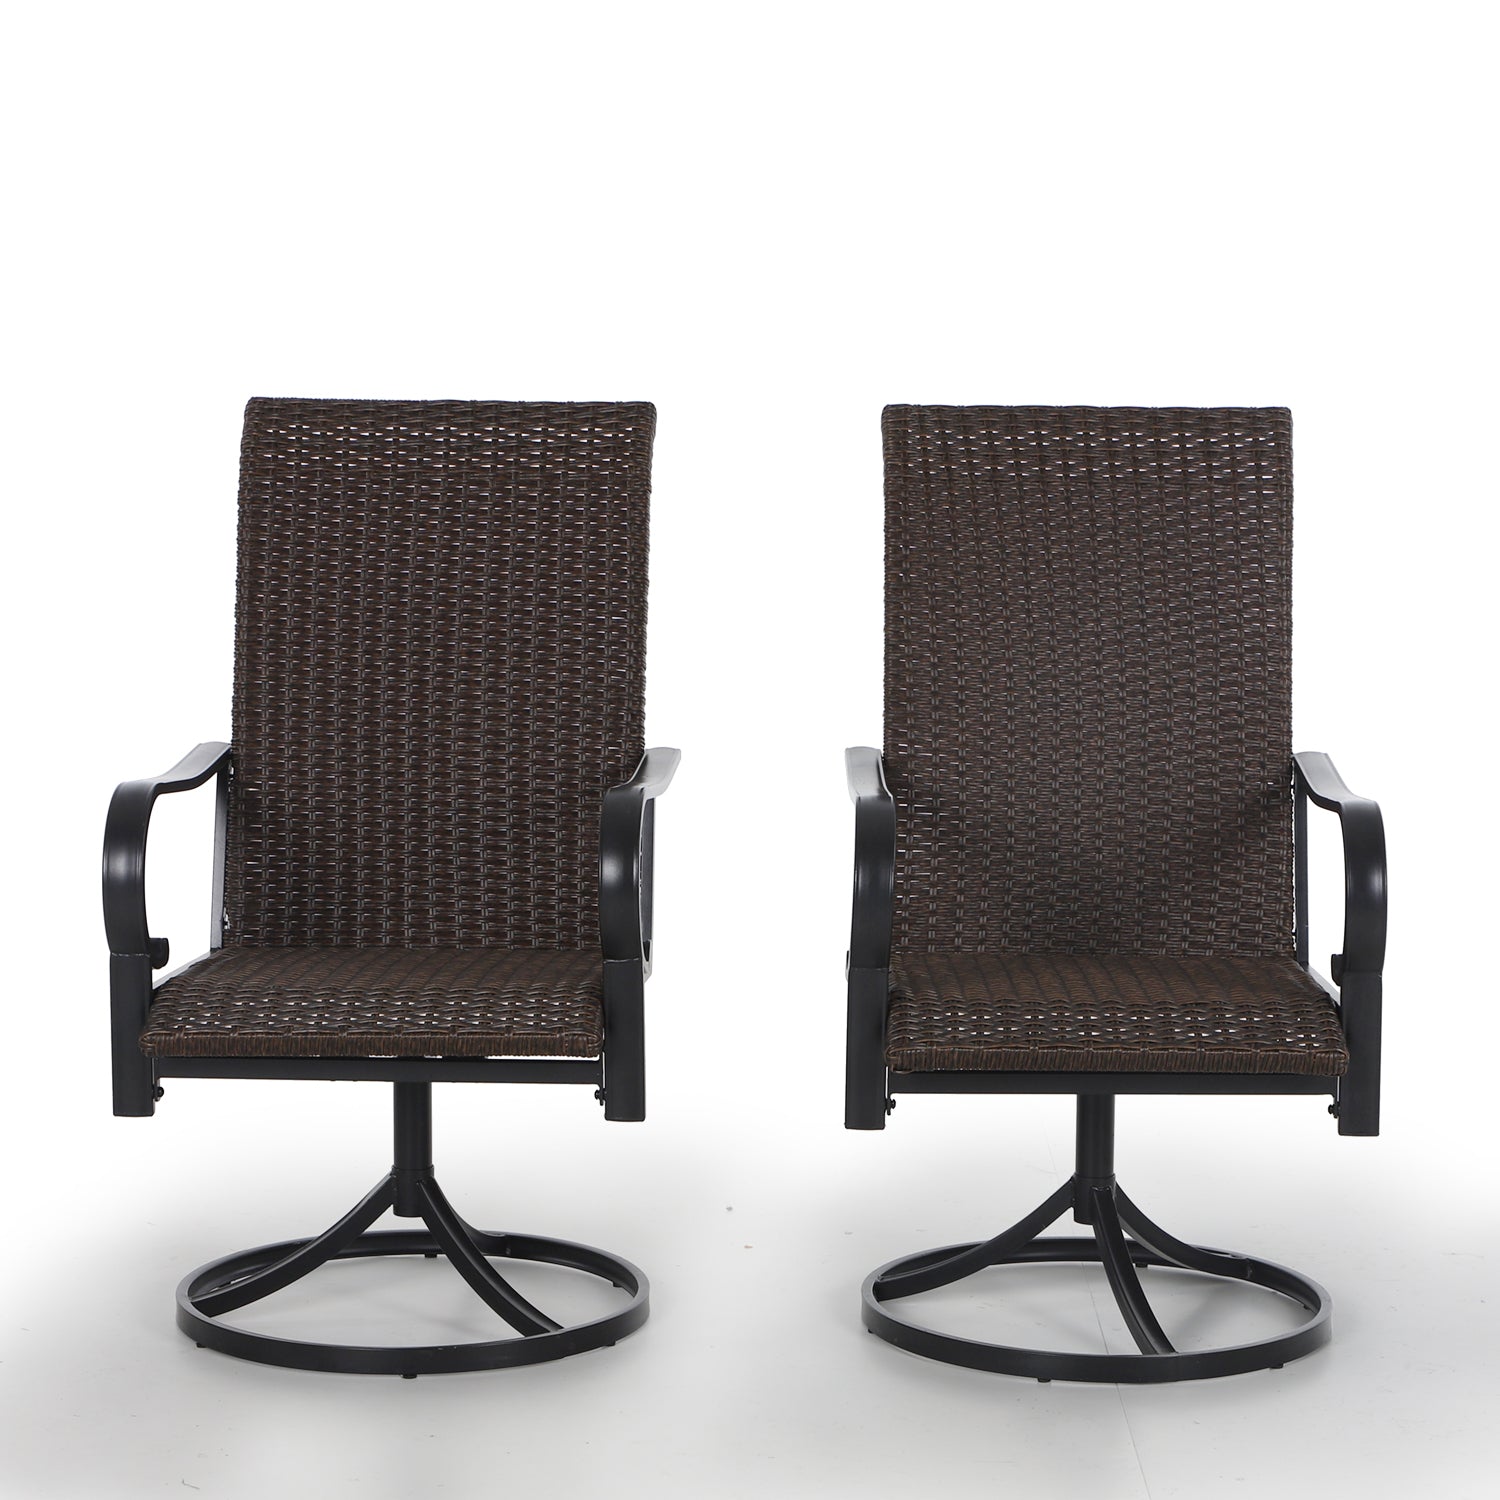 PHI VILLA Rattan Swivel Patio Dining Chairs, Set of 2